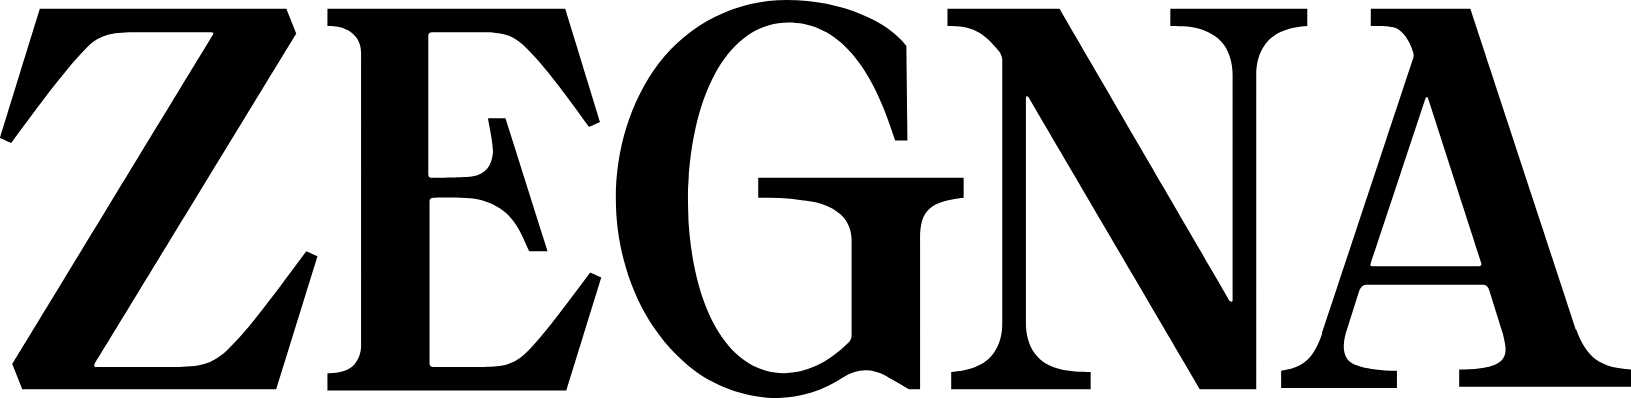 Ermenegildo Zegna logo large (transparent PNG)